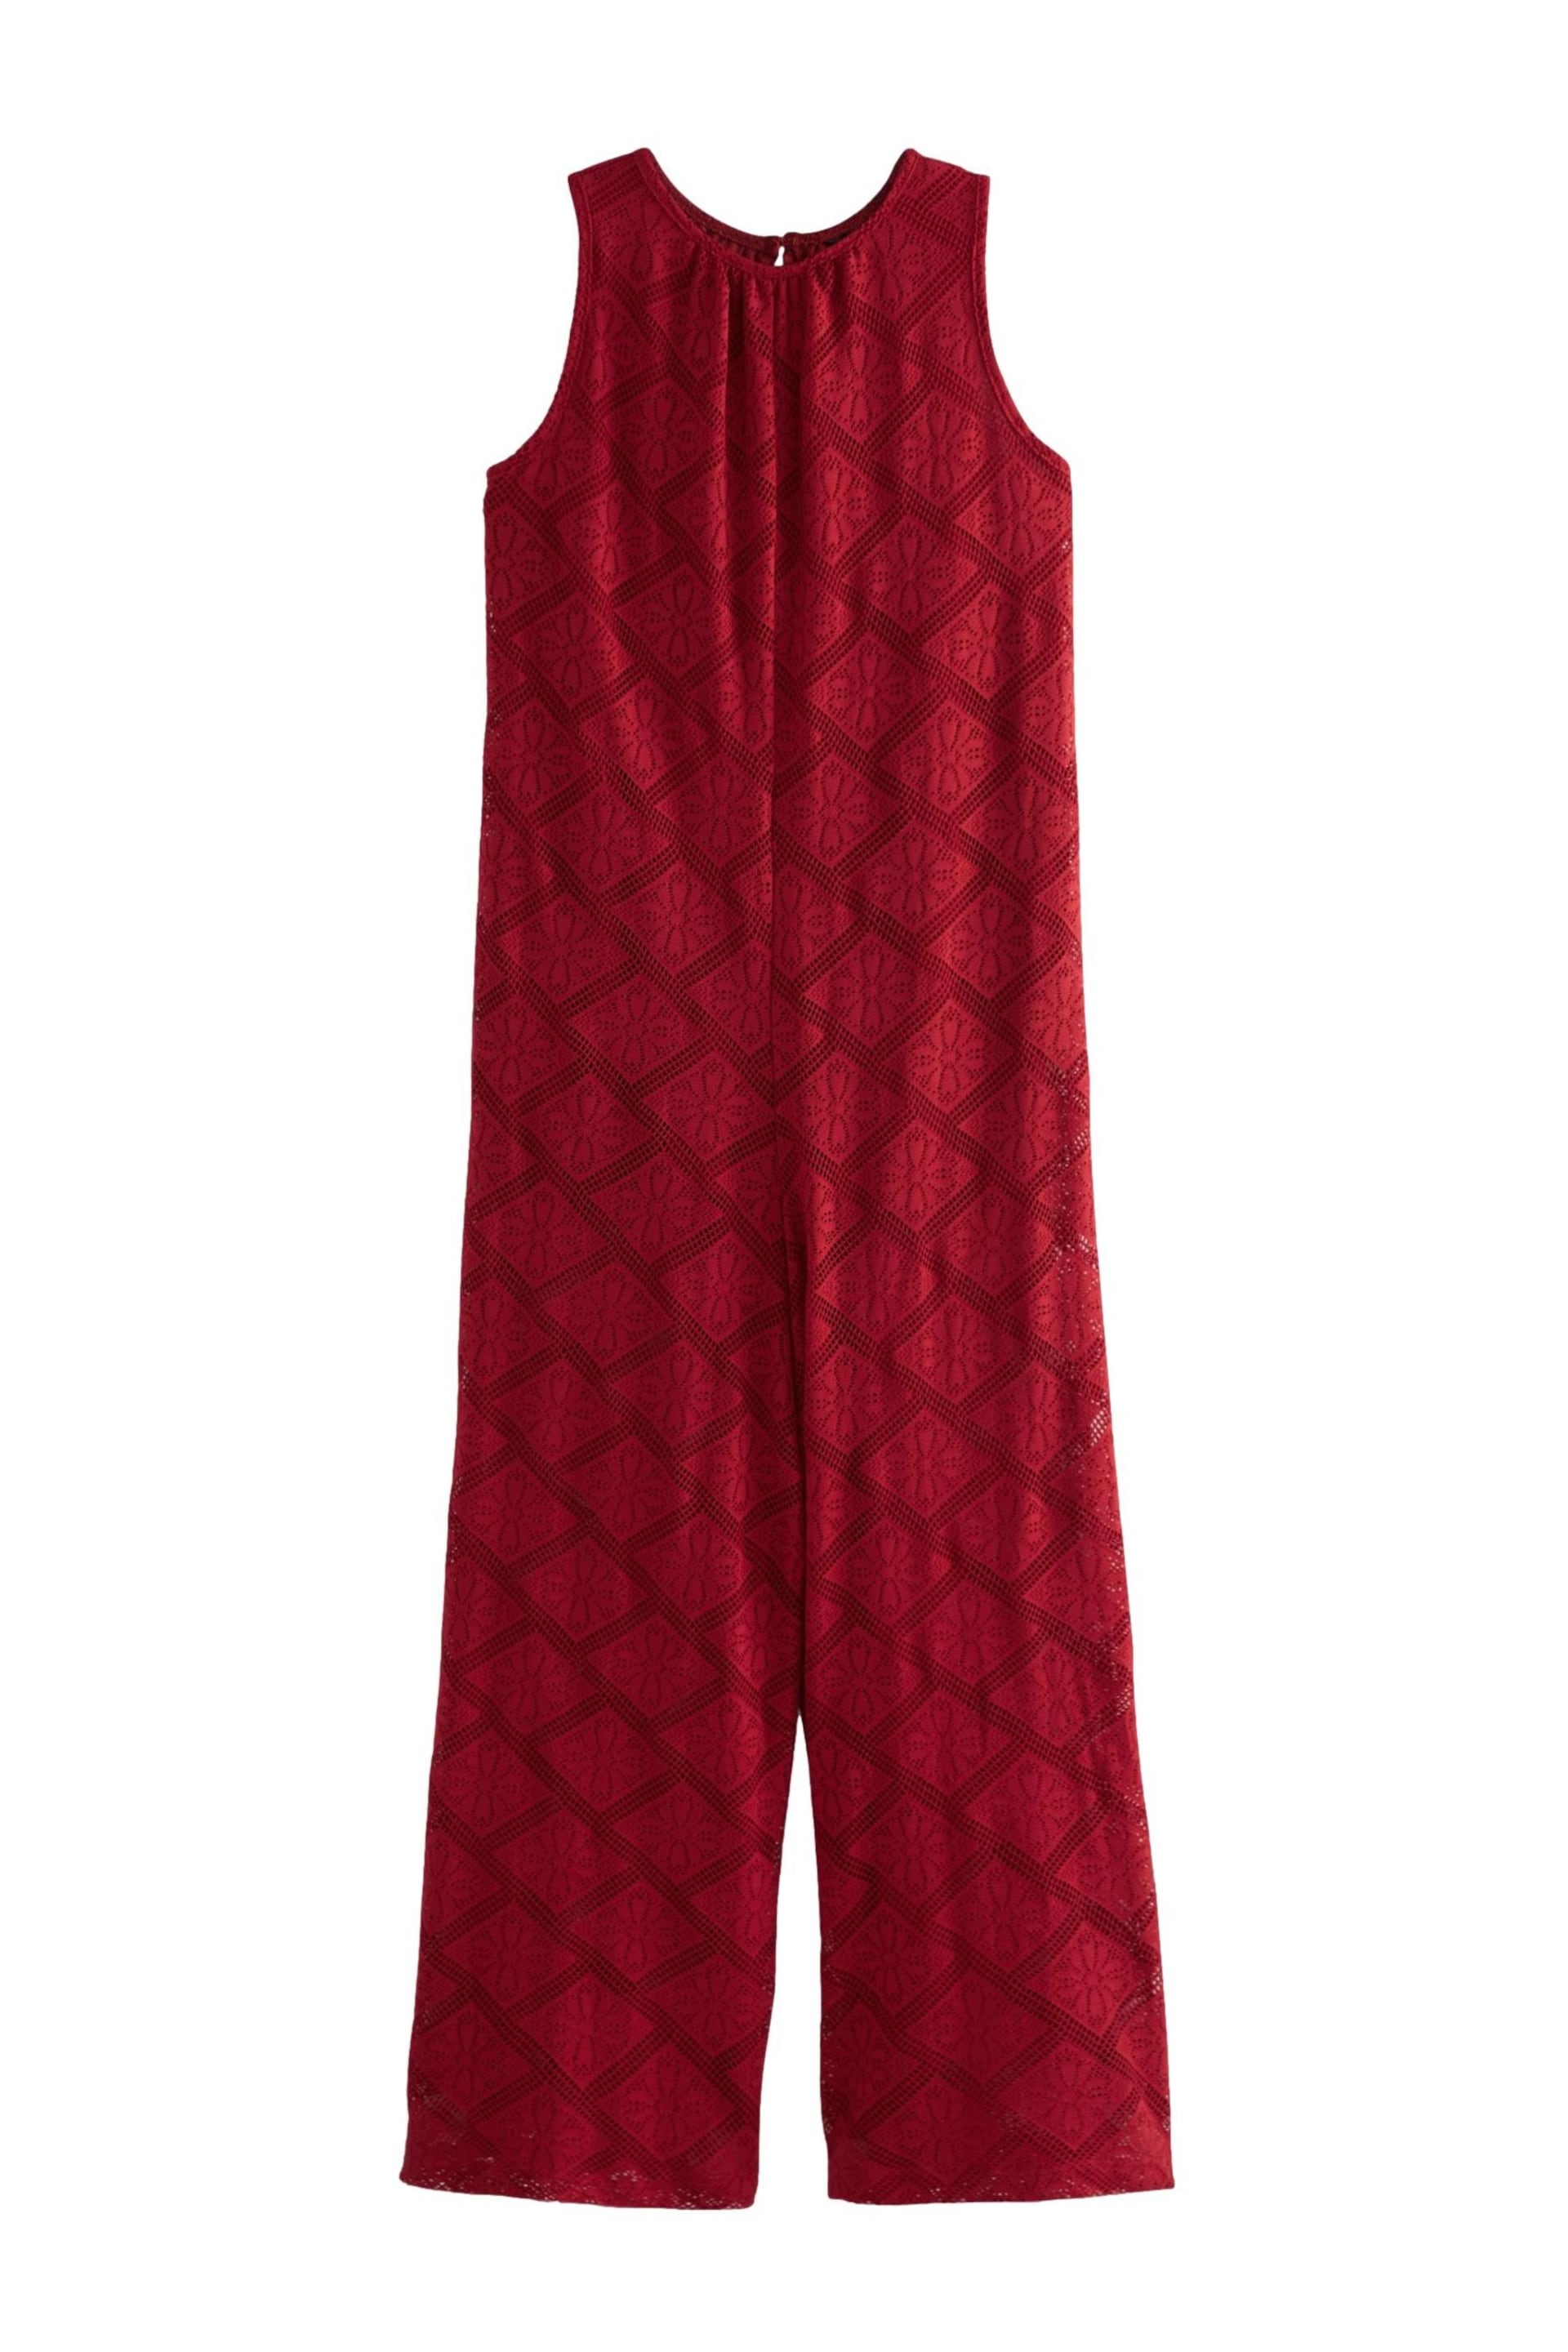 Red Sleeveless Crochet Jumpsuit - Image 5 of 6